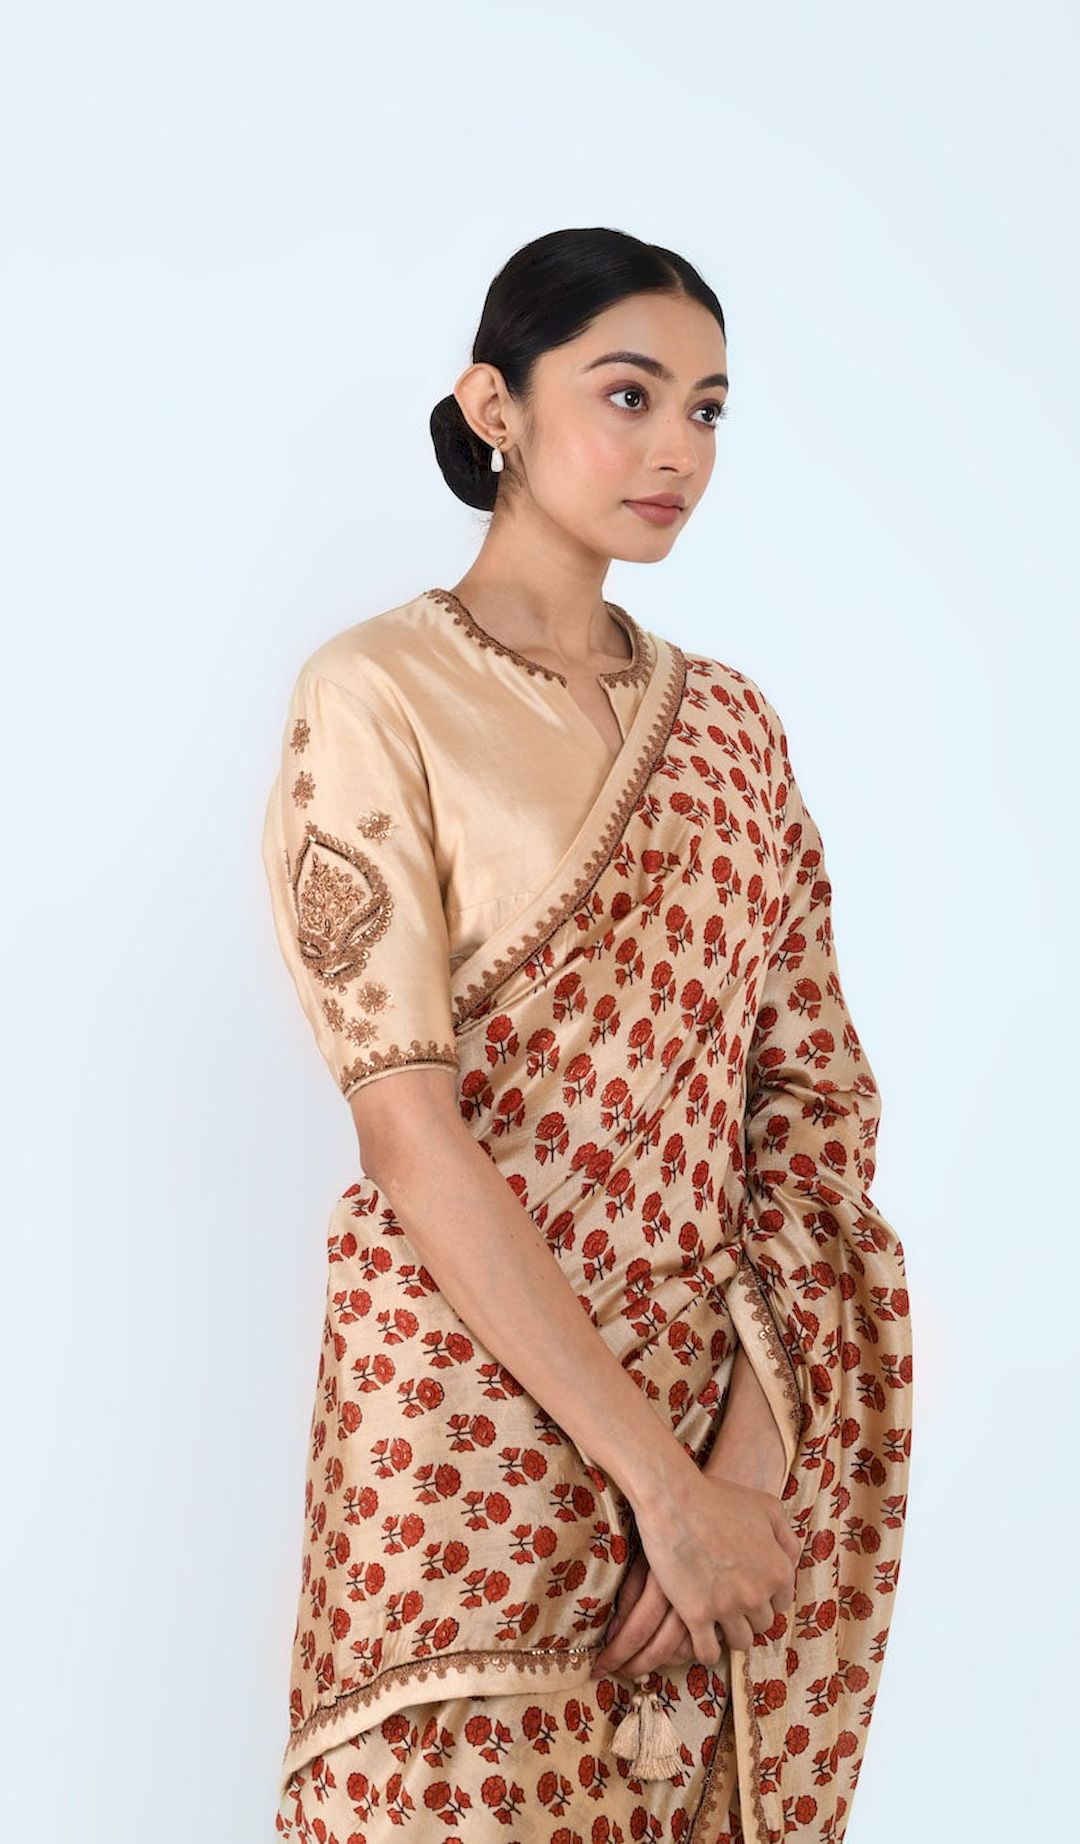 Printed Silk Sari With Blouse. (Beige Printed) - Prashant Chouhan